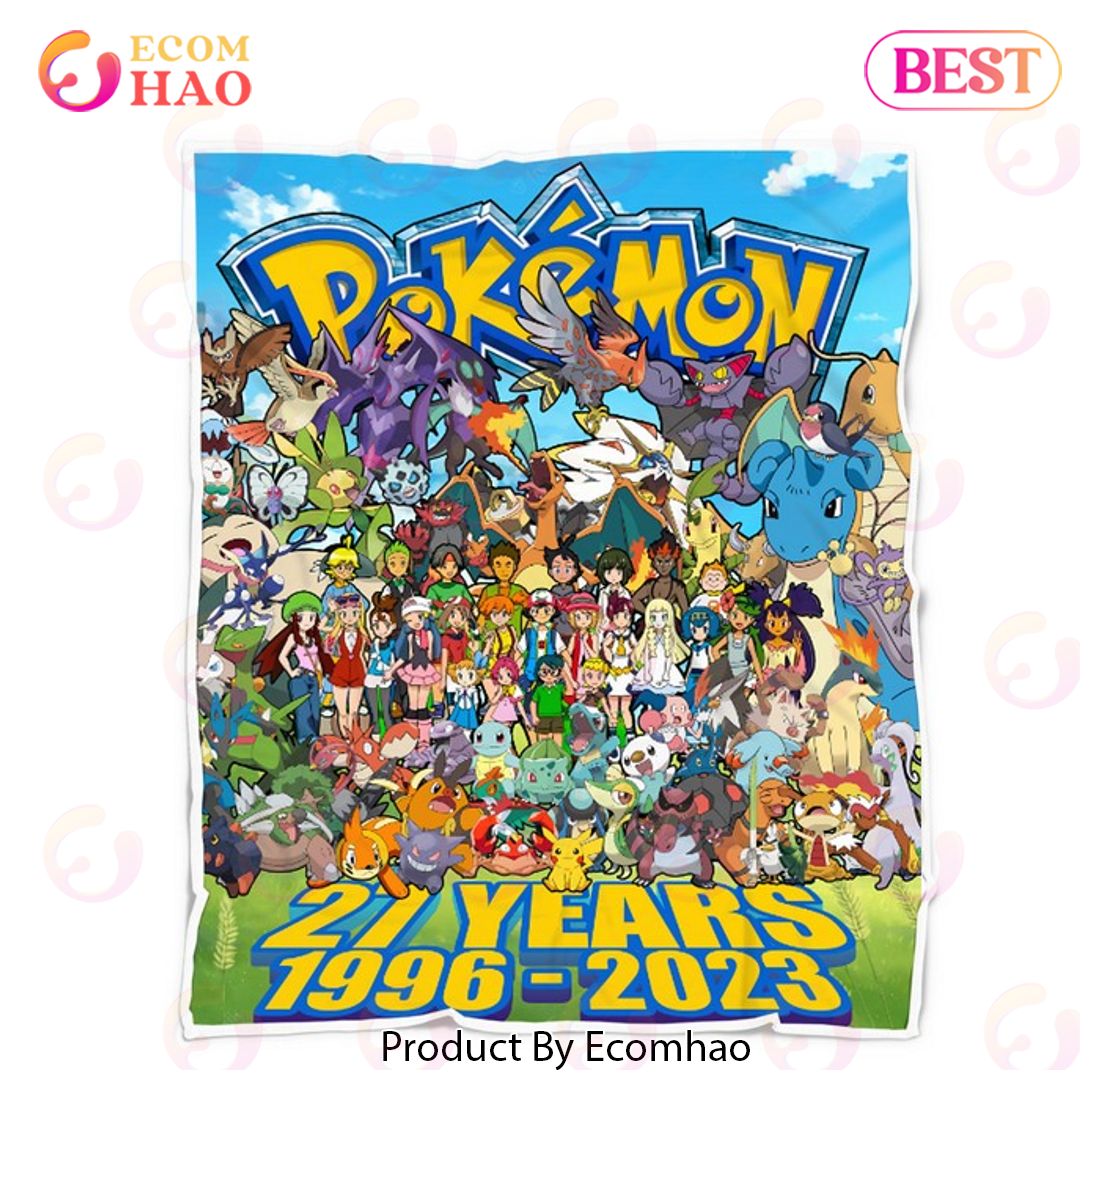 Pokemon Final 27 Years 1996 - 2023 Quilt, Fleece Blanket, Sherpa Fleece Blanket